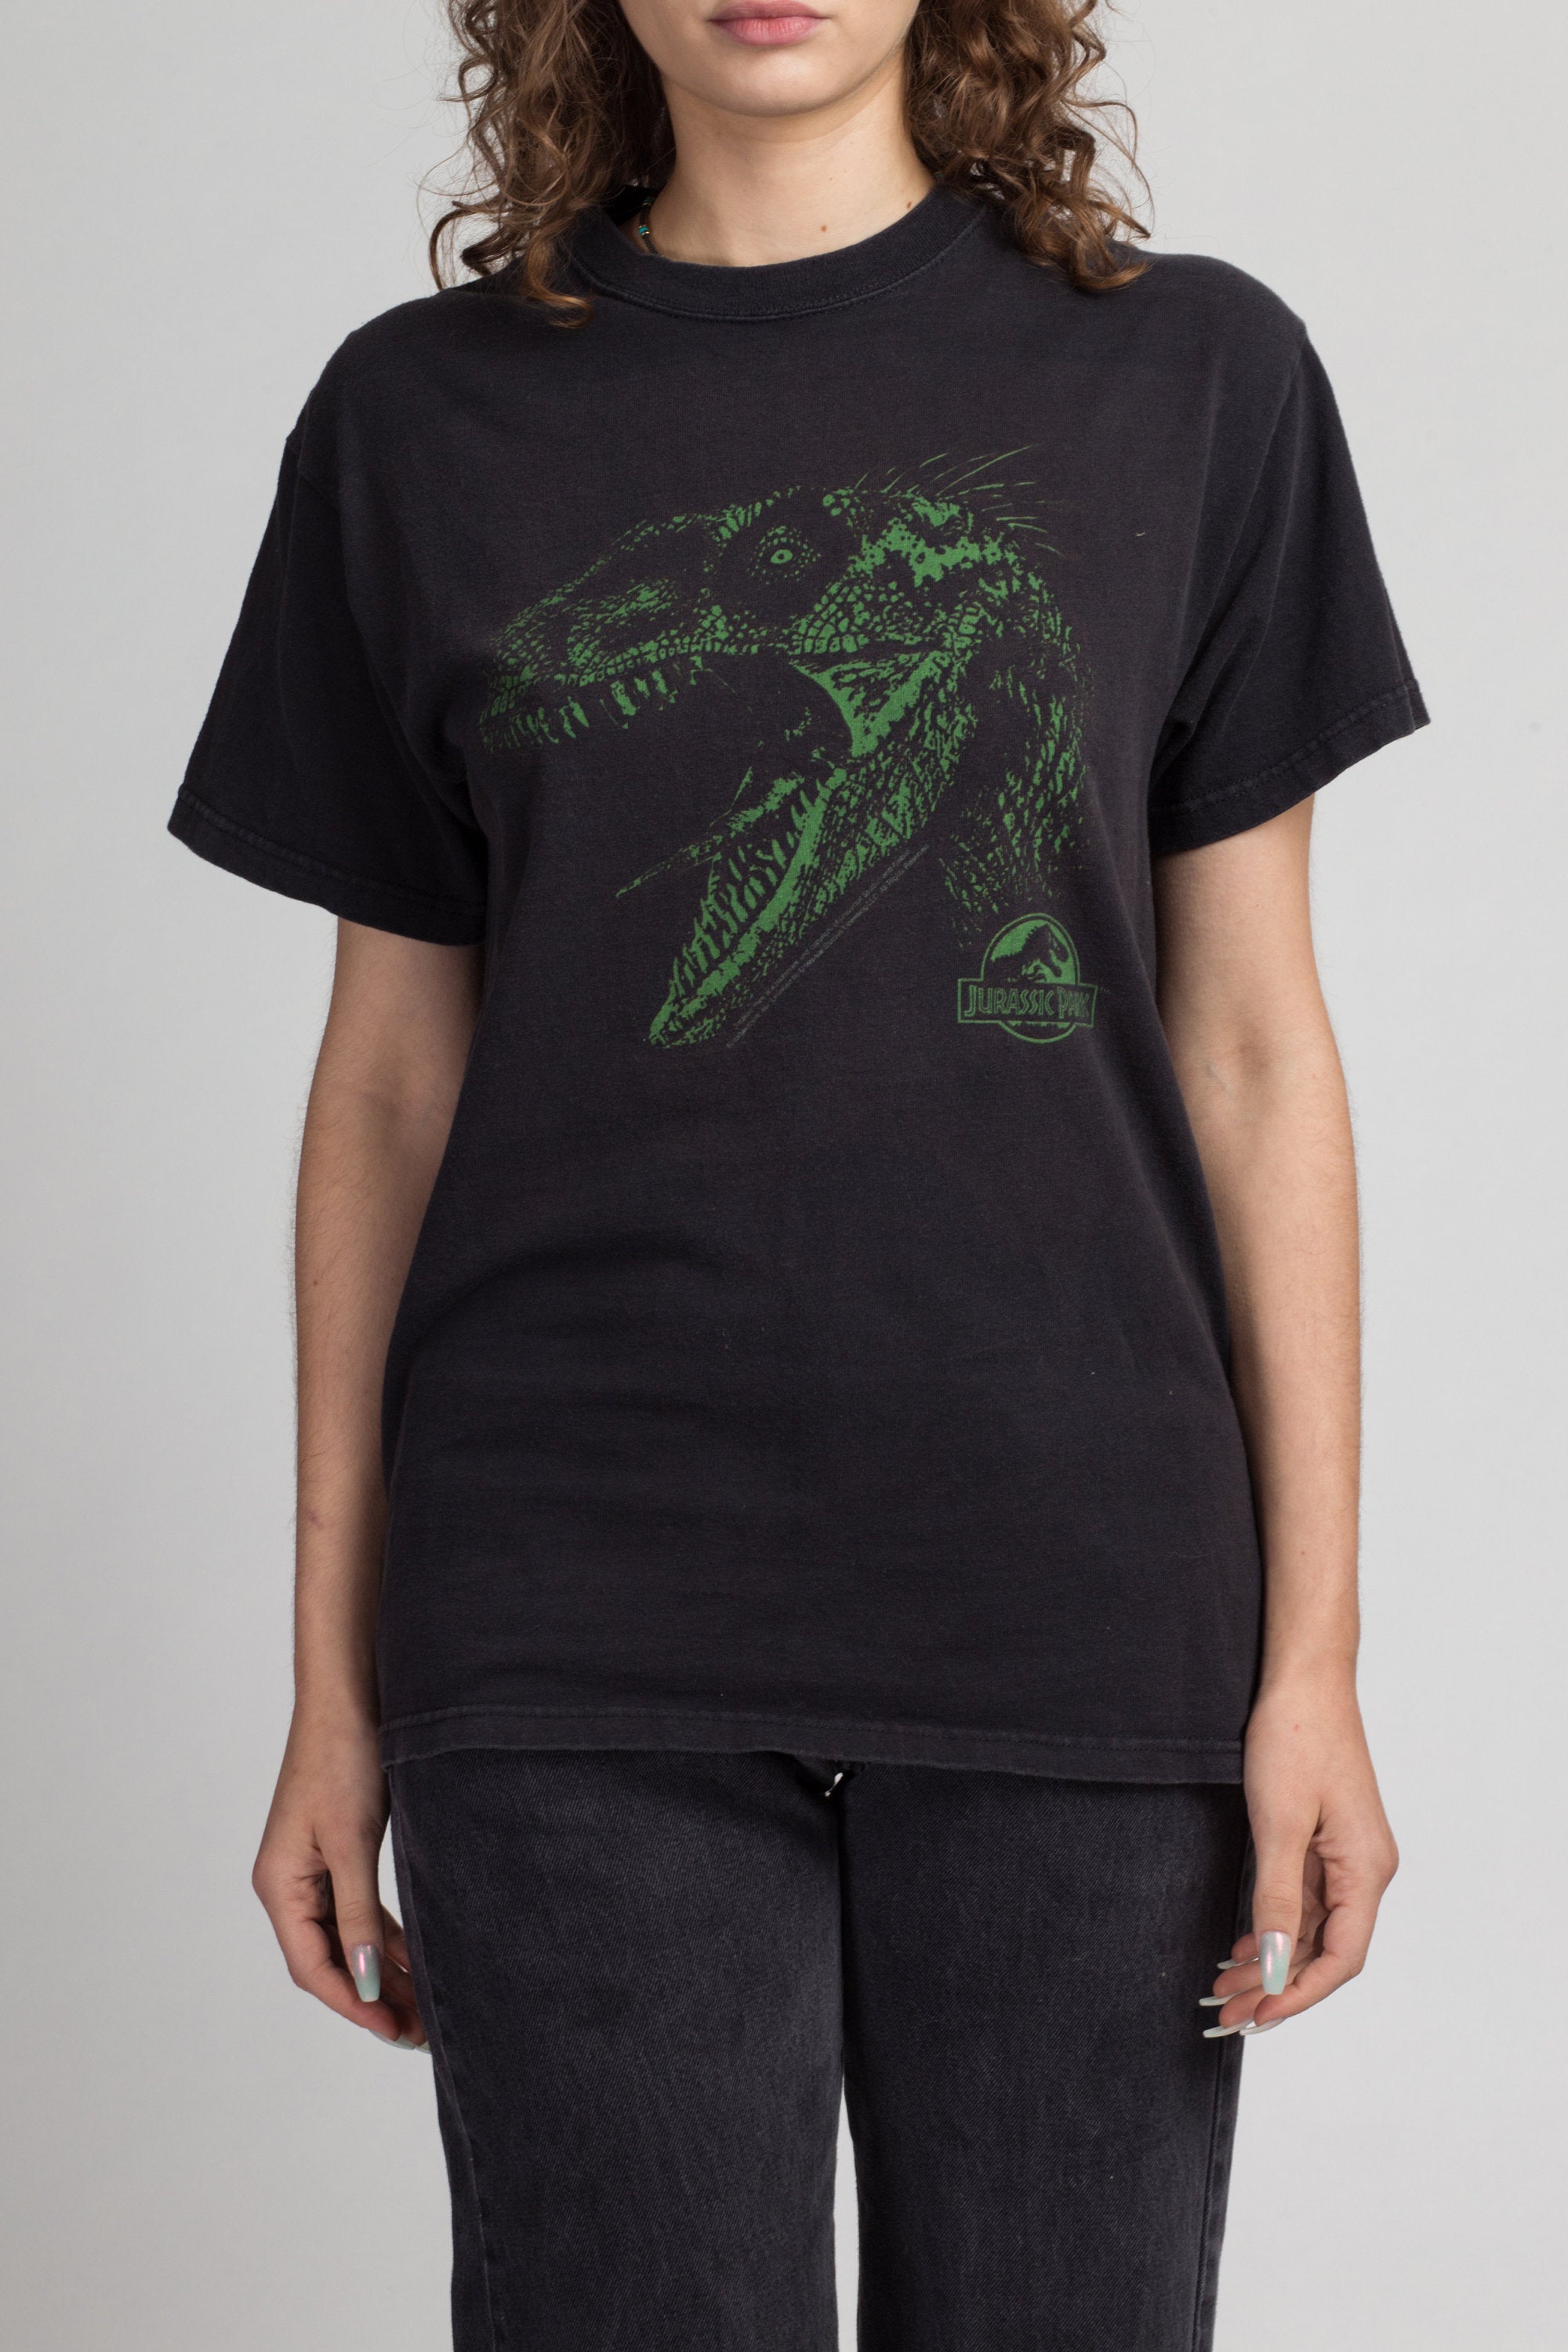 90s Jurassic Park T Shirt - Medium